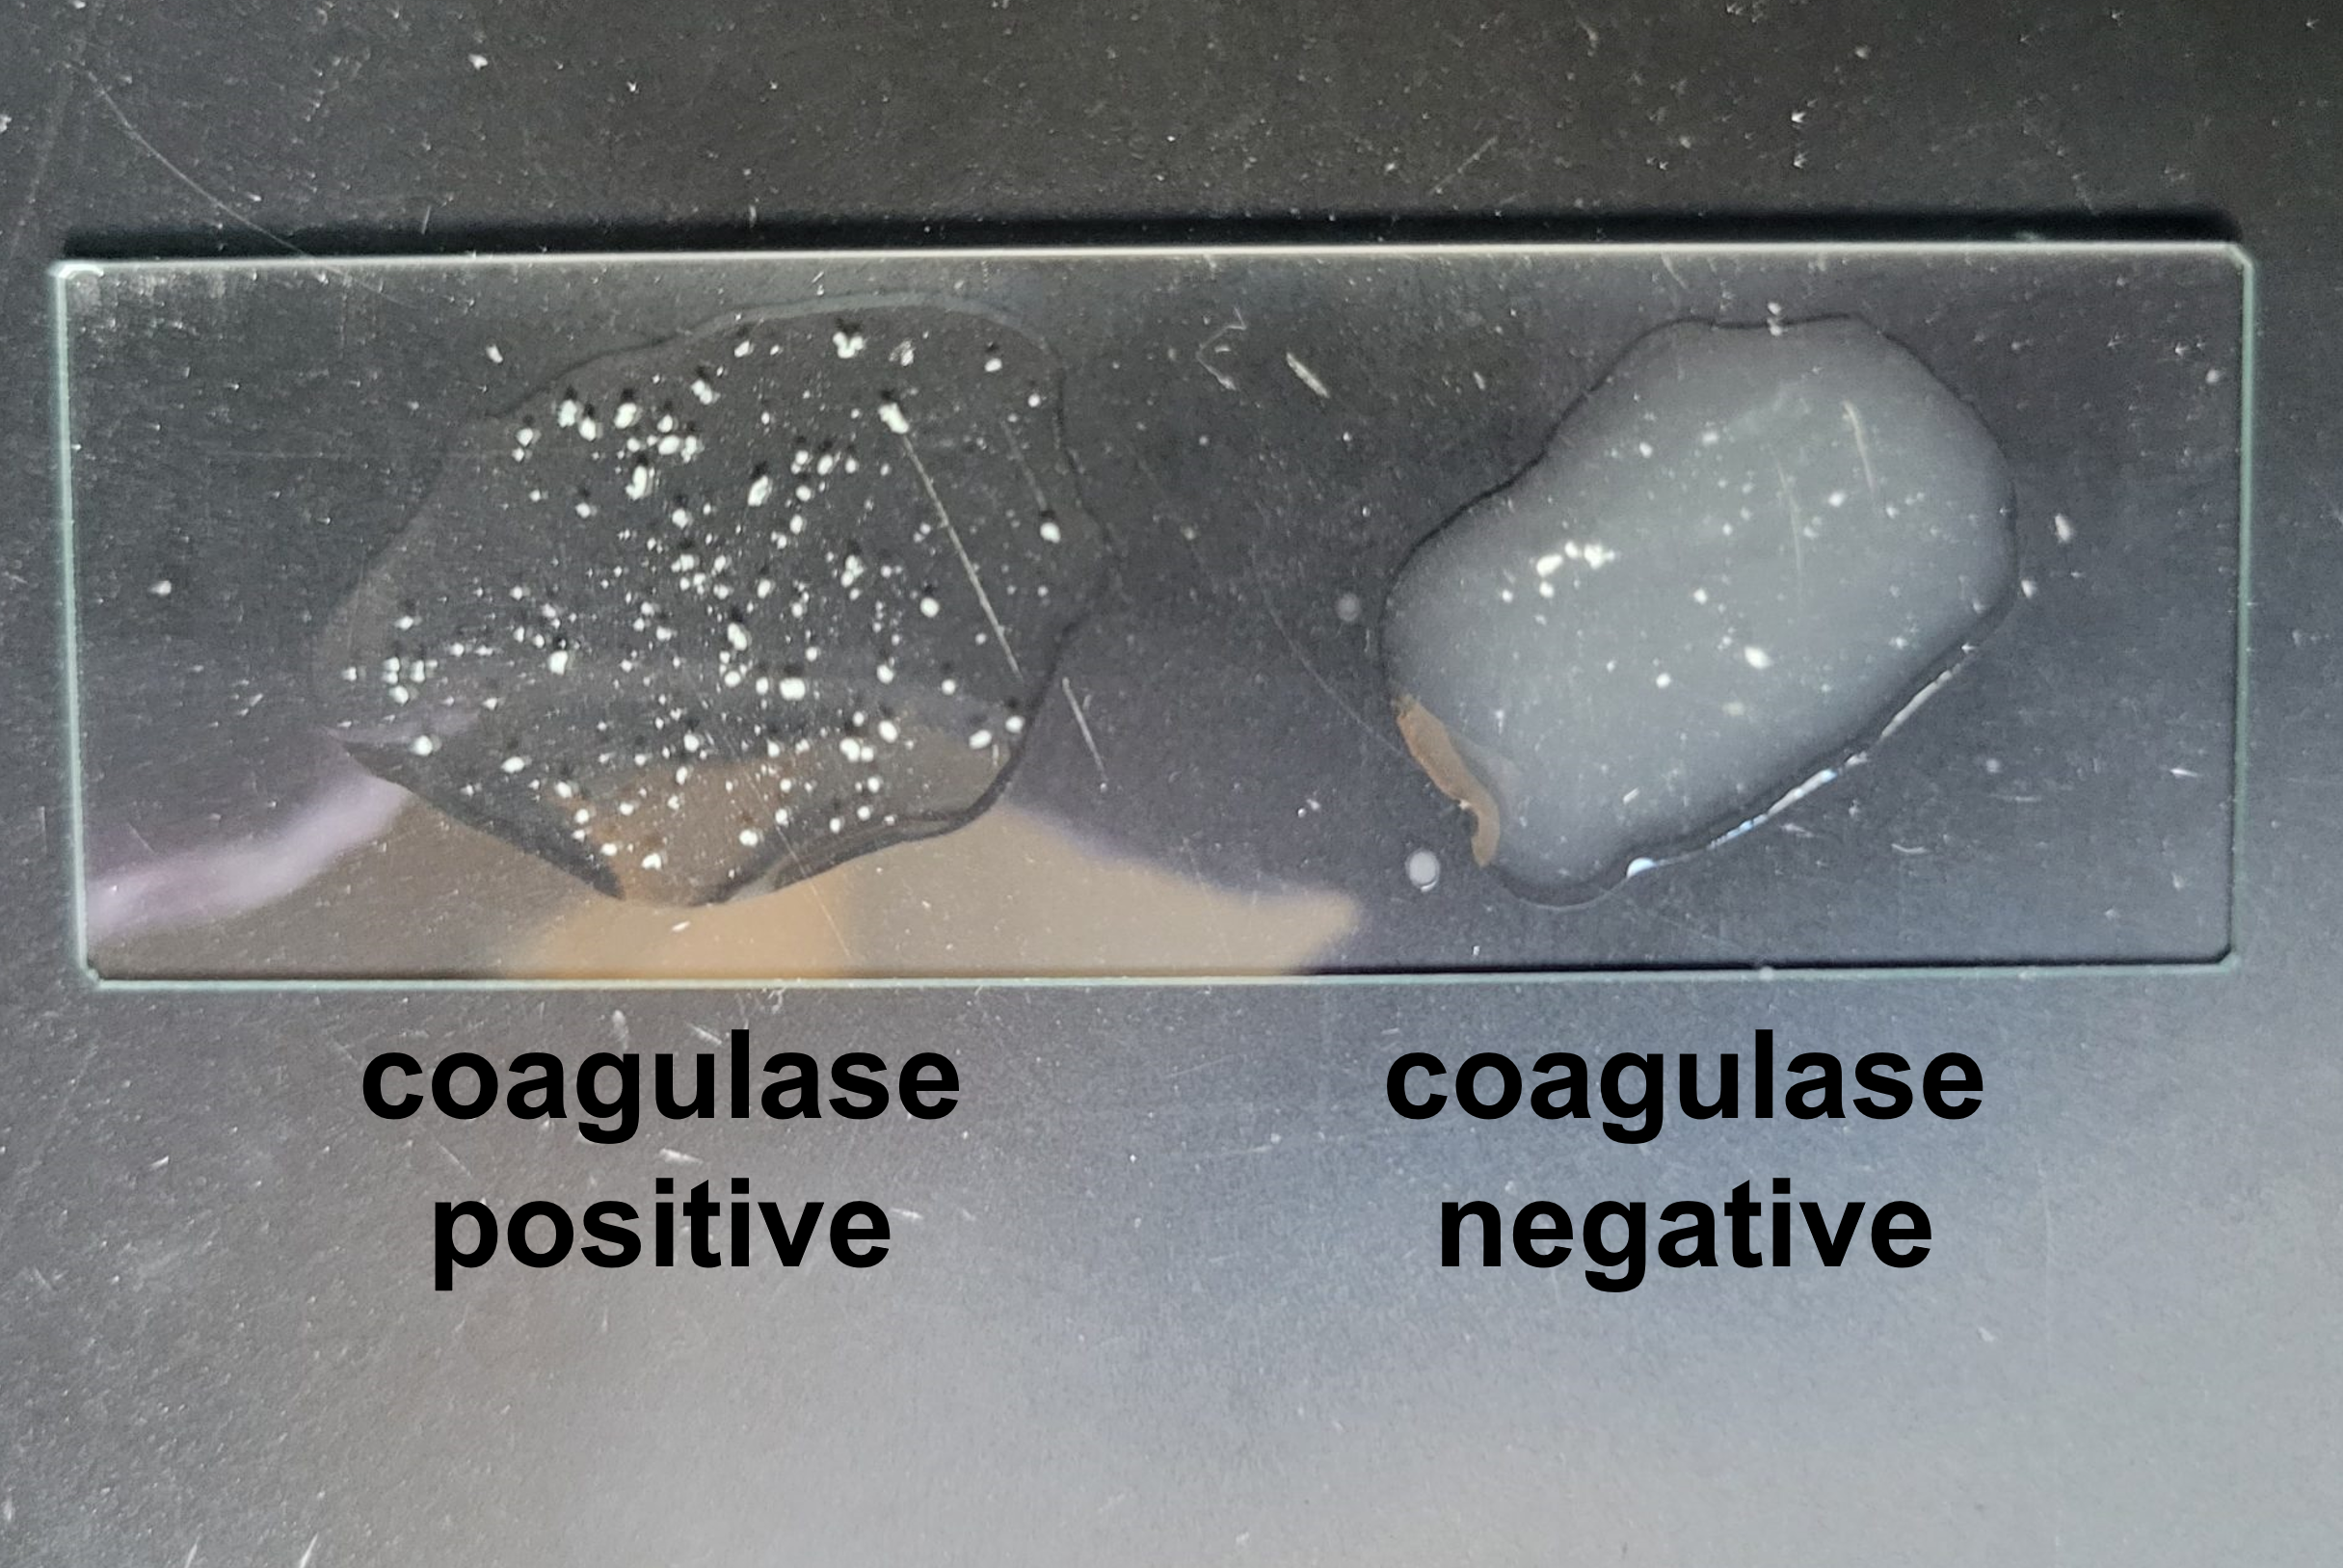 coagulase slide test showing coagulase positive and coagulase negative results